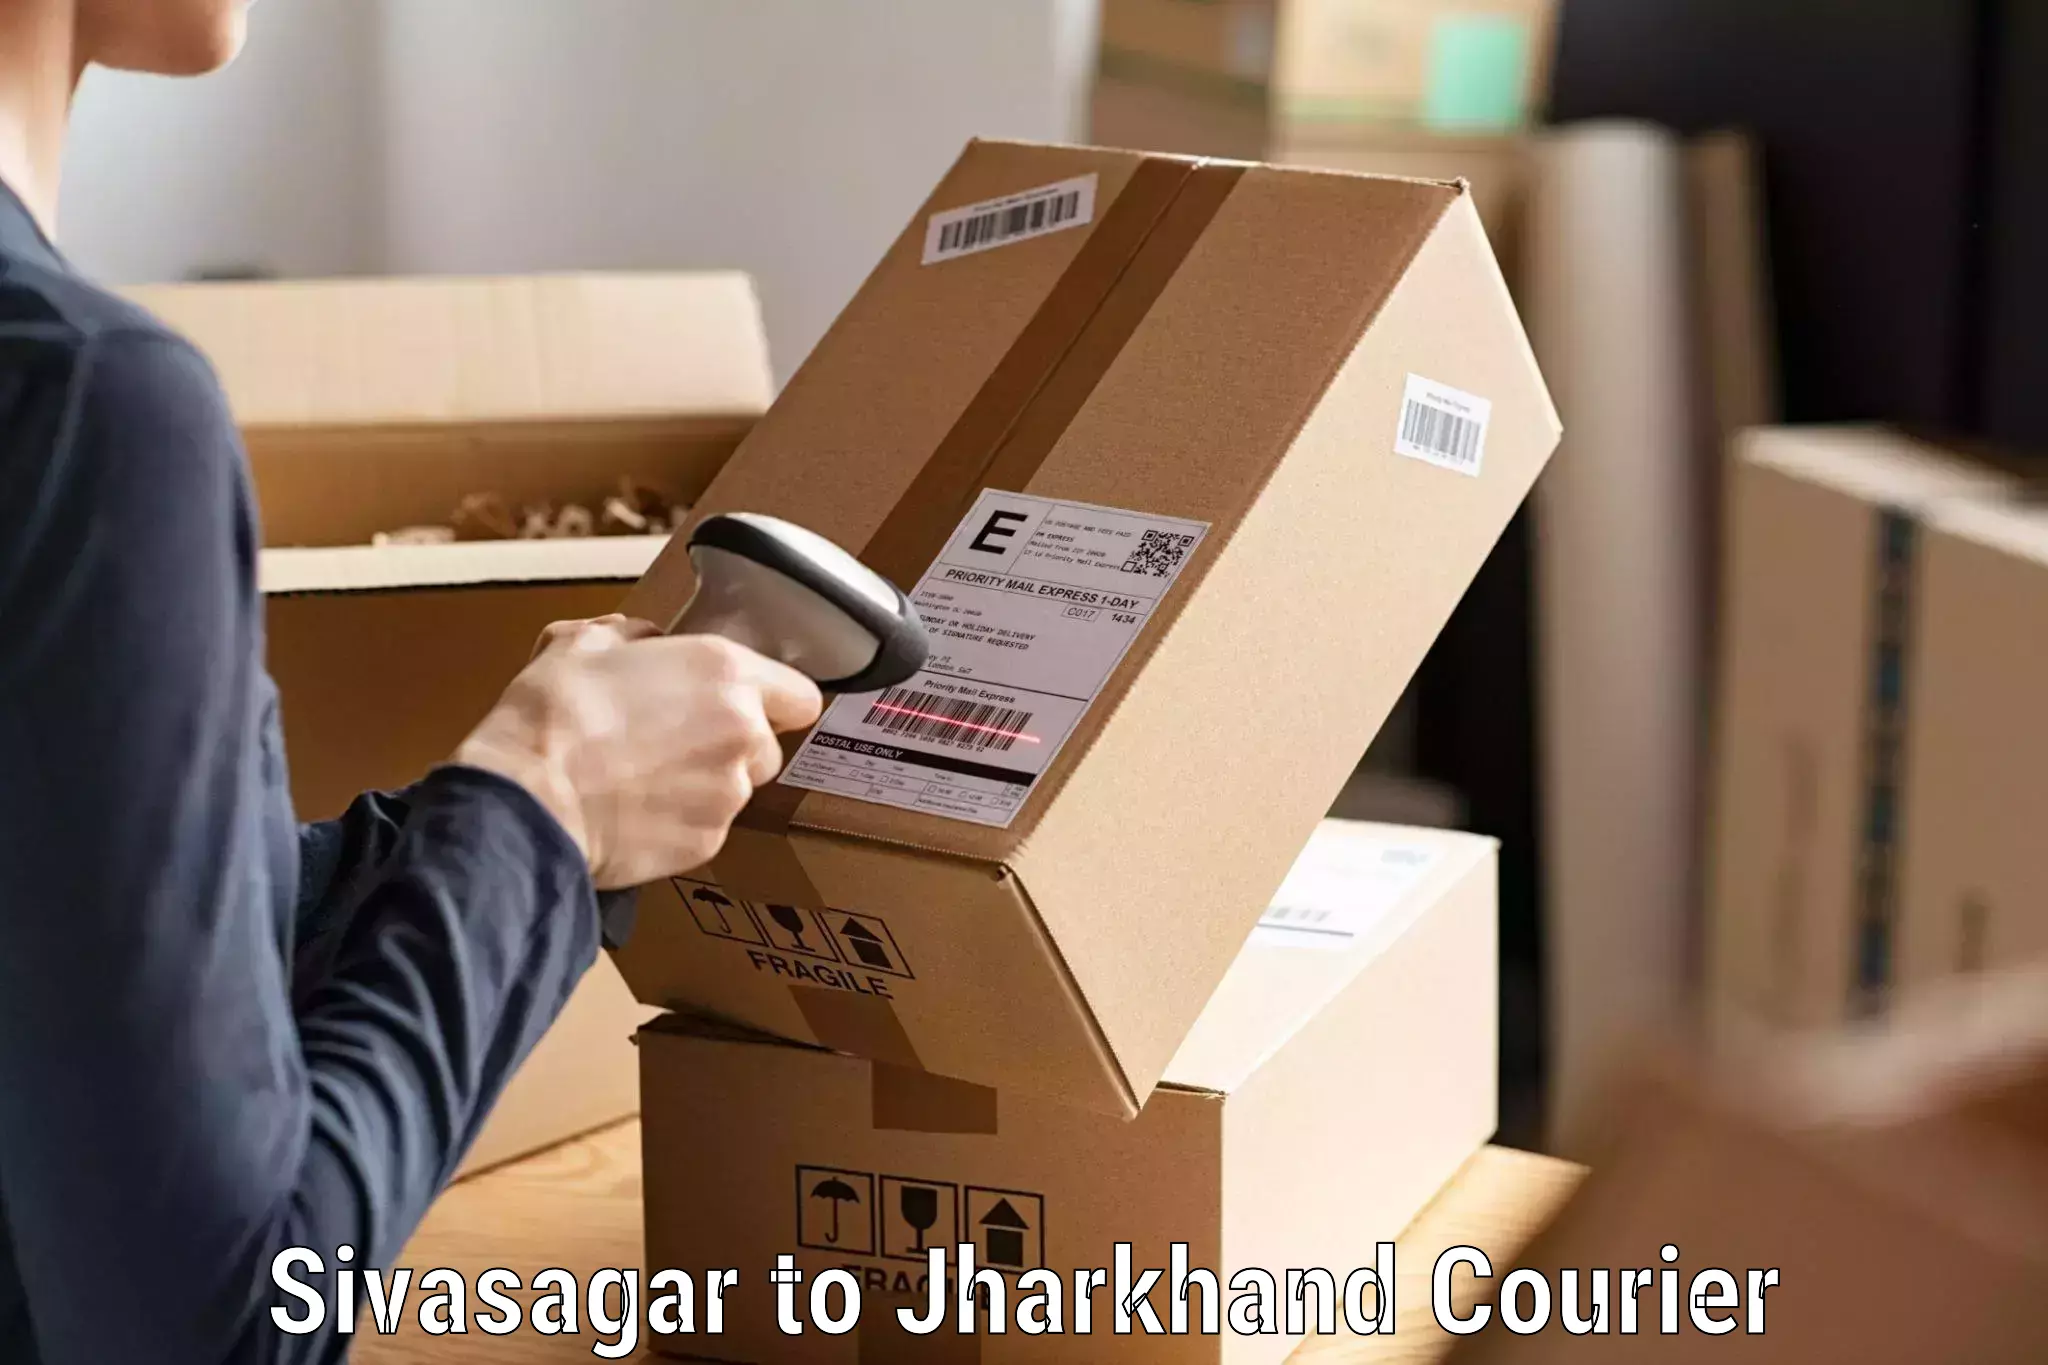 Professional courier handling Sivasagar to Chandil